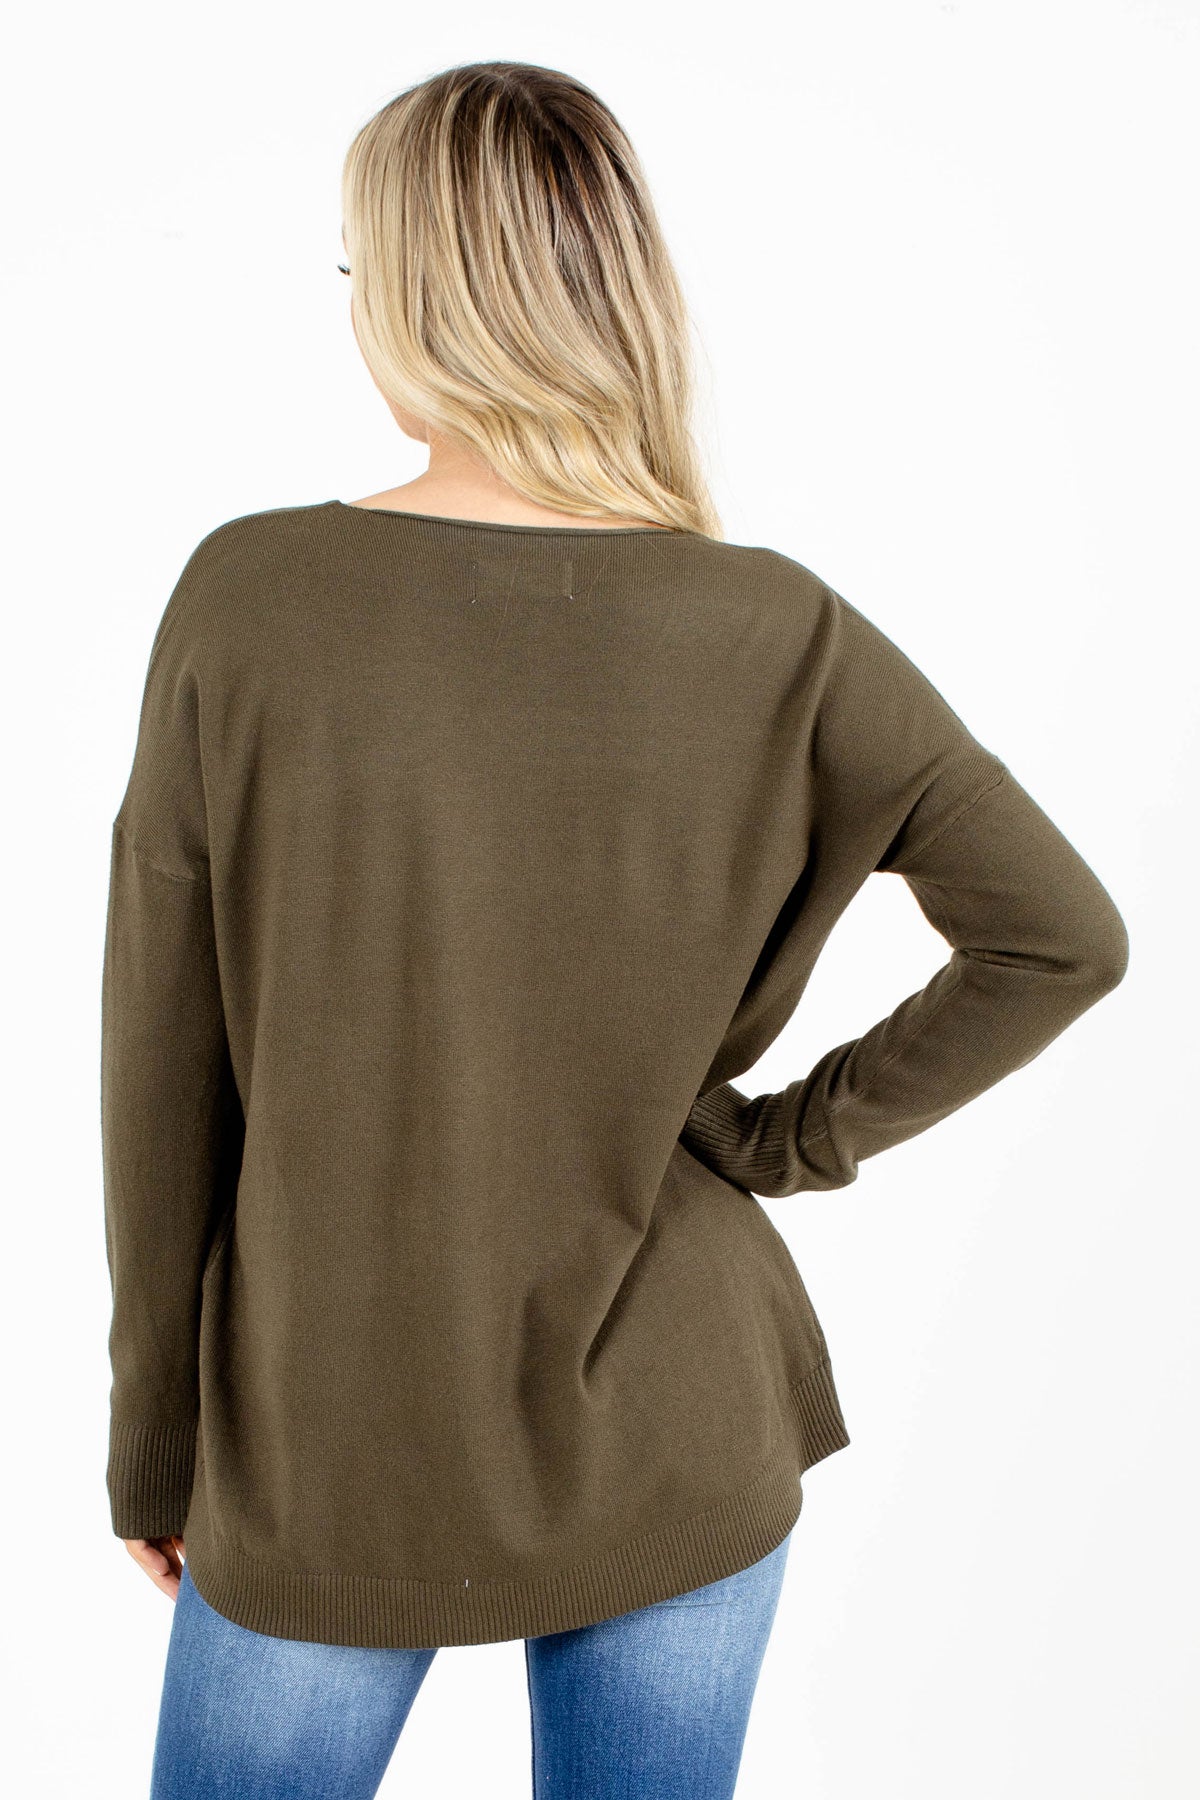 Women's Dark Olive Green Long Sleeve Sweater